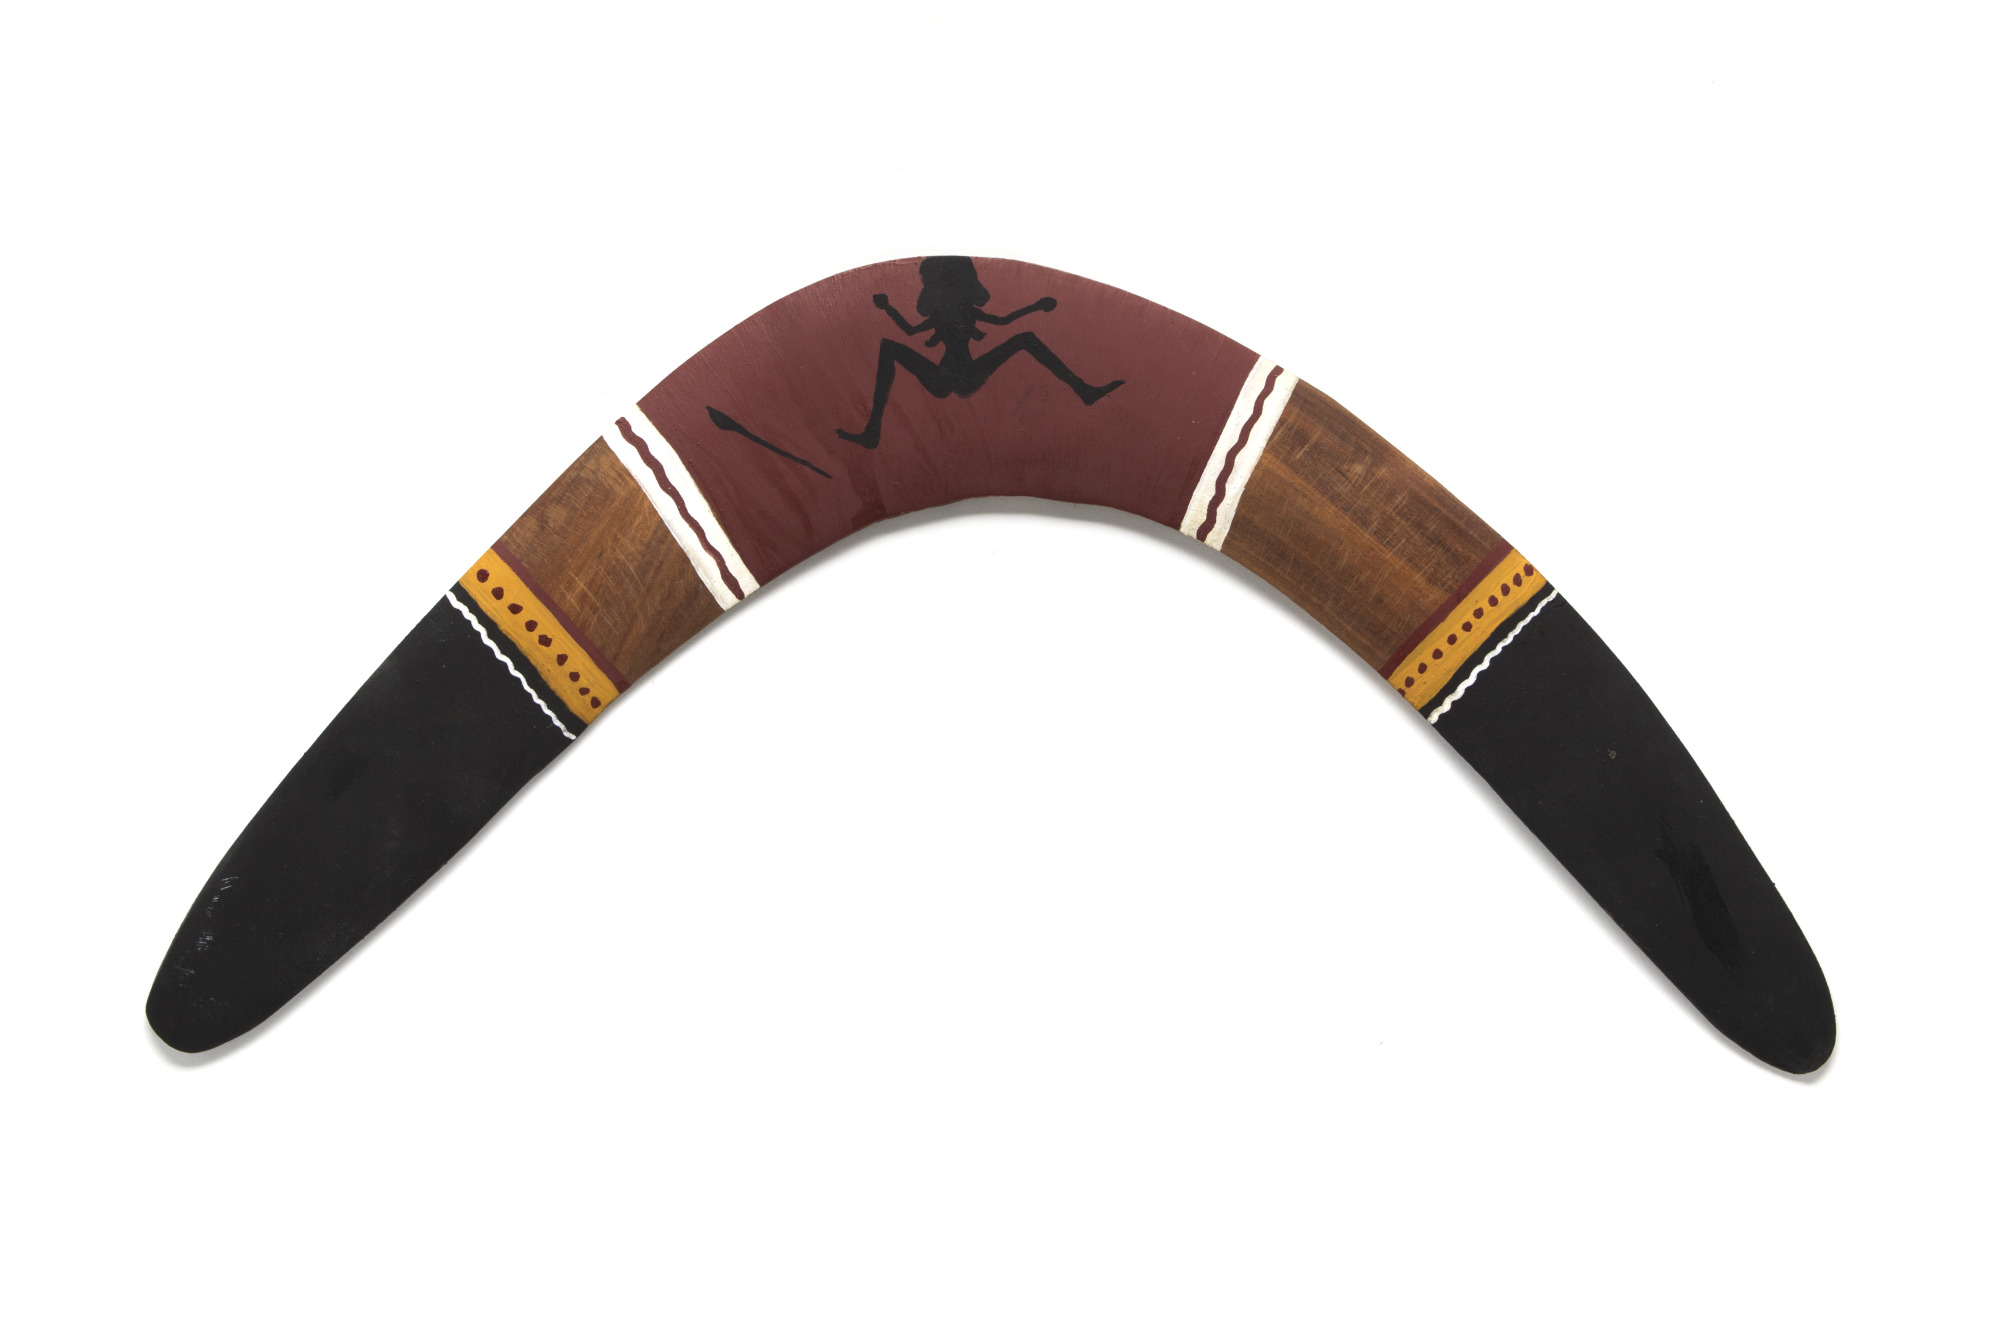 Wooden boomerang.